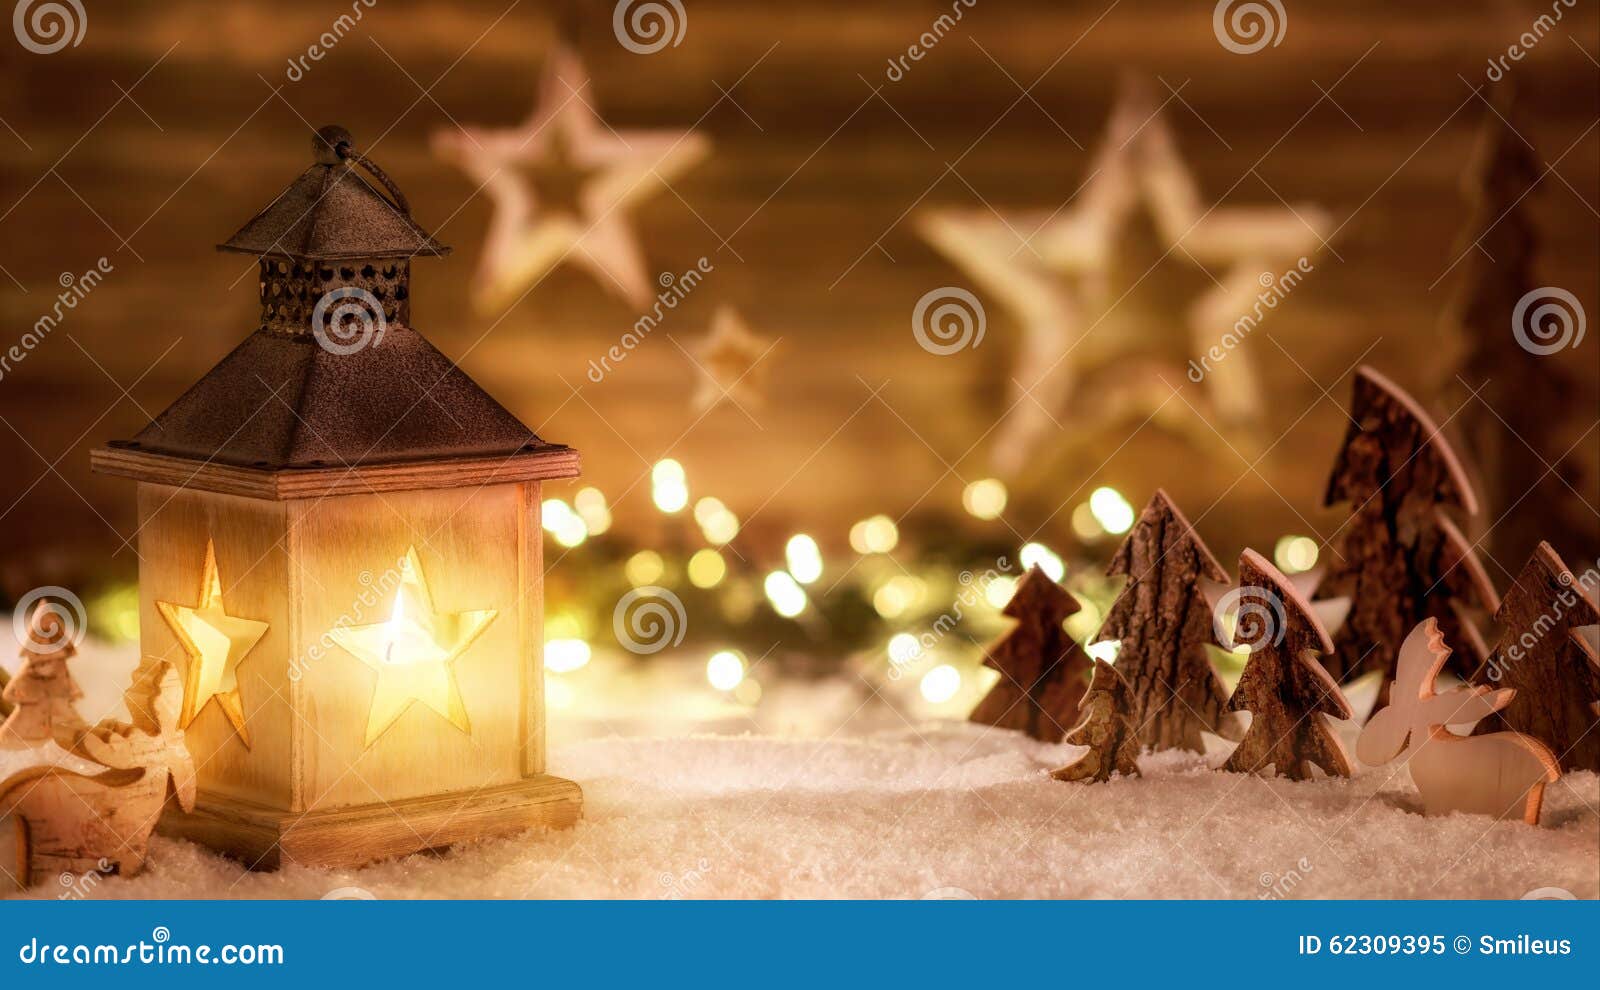 christmas scene in warm lantern light